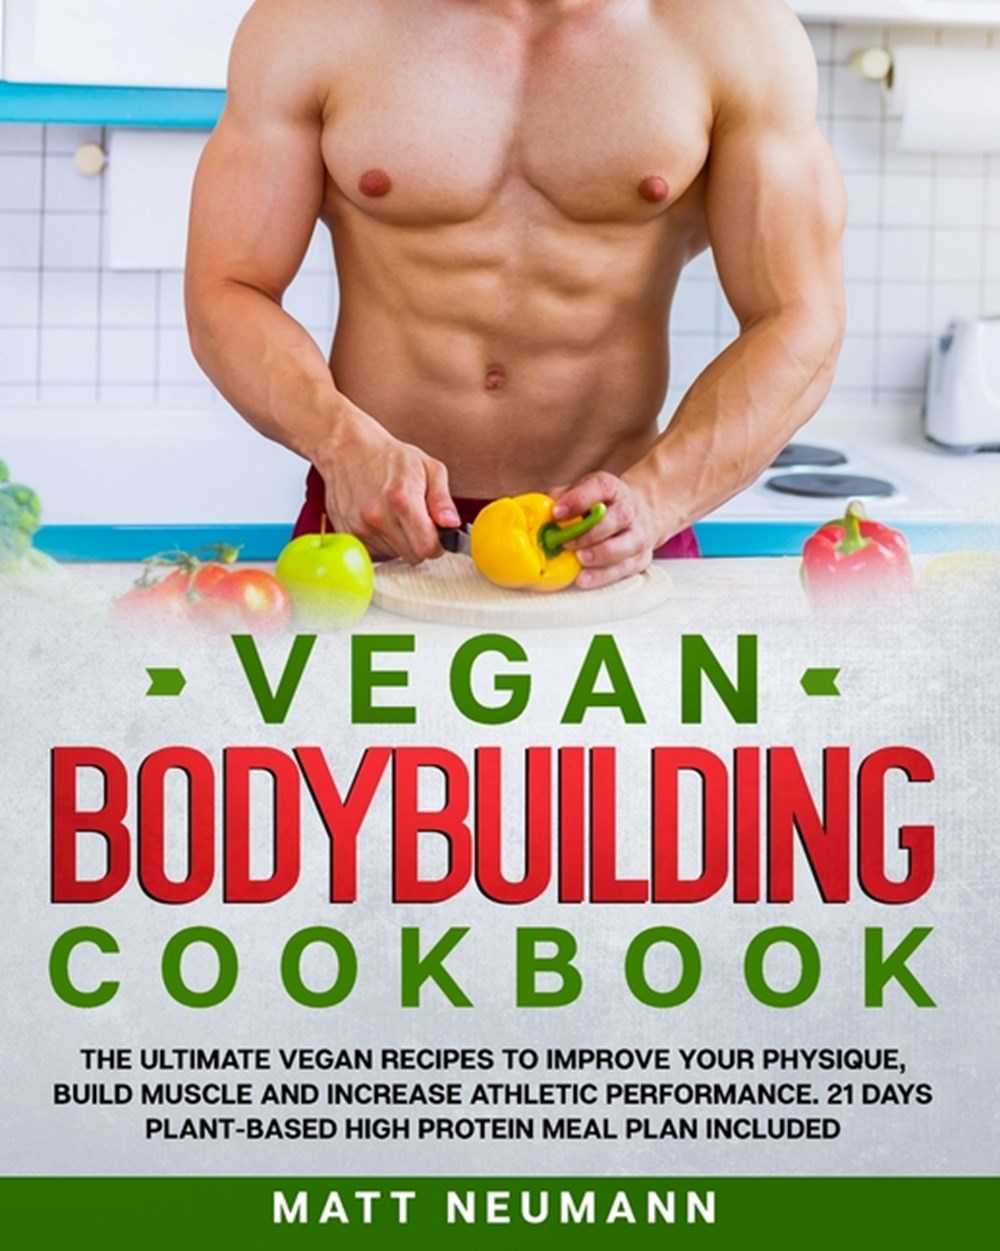 Vegan Bodybuilding Cookbook: Vegan Bodybuilding Cookbook: The Ultimate Vegan Recipes to Improve Your